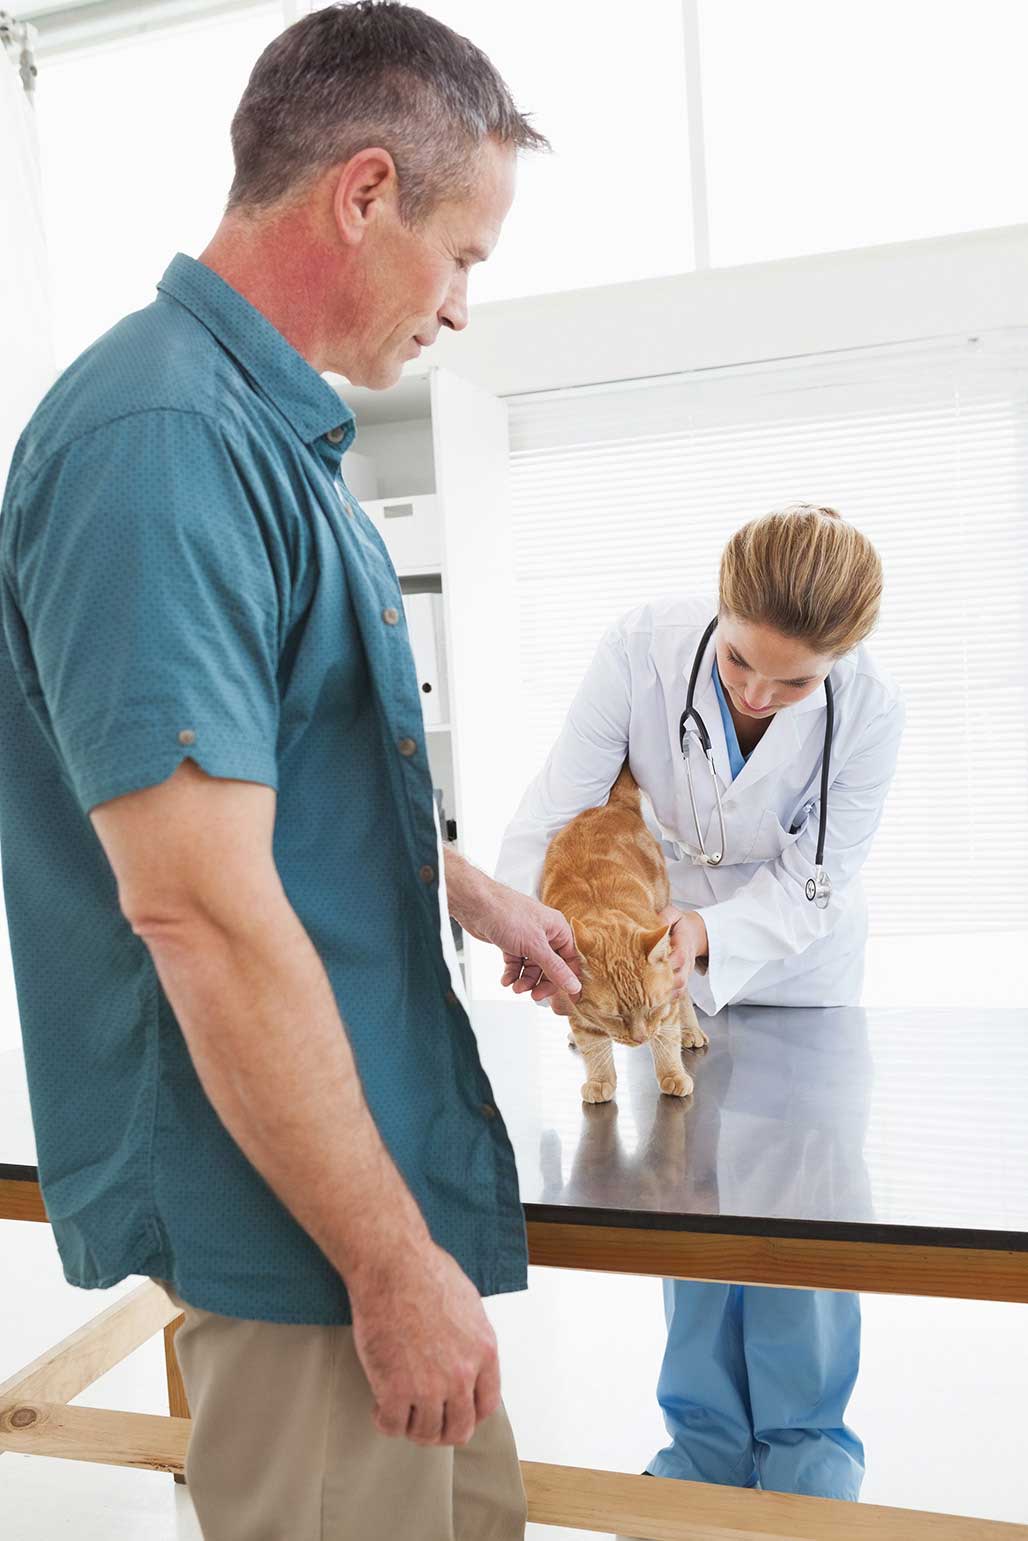 cat being examined examination Image: © WavebreakmediaMicro / Adobe Stock